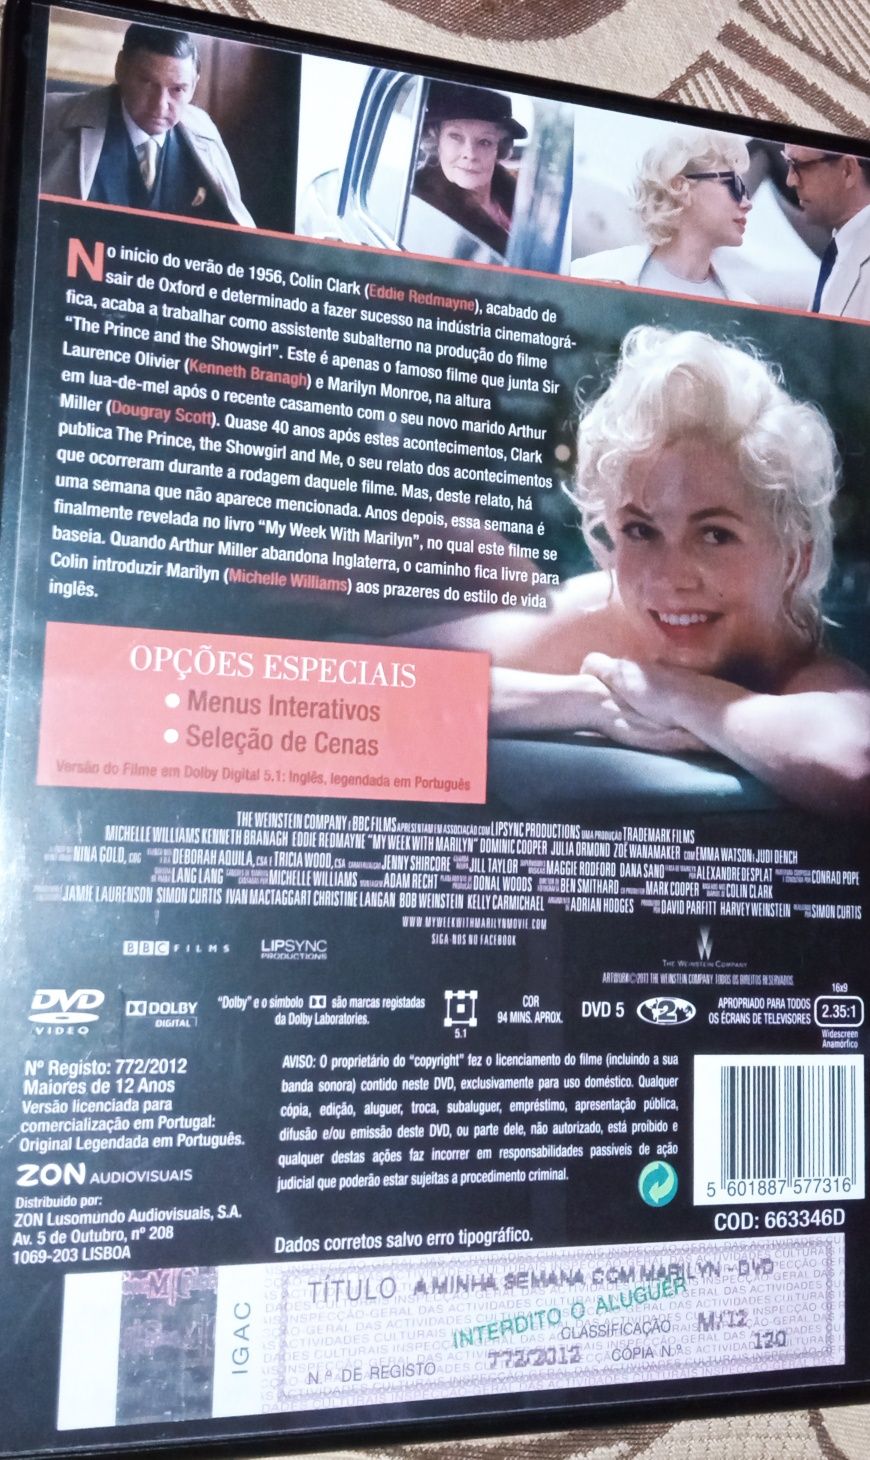 DVD• A minha semana com MARILYN Monroe |2012